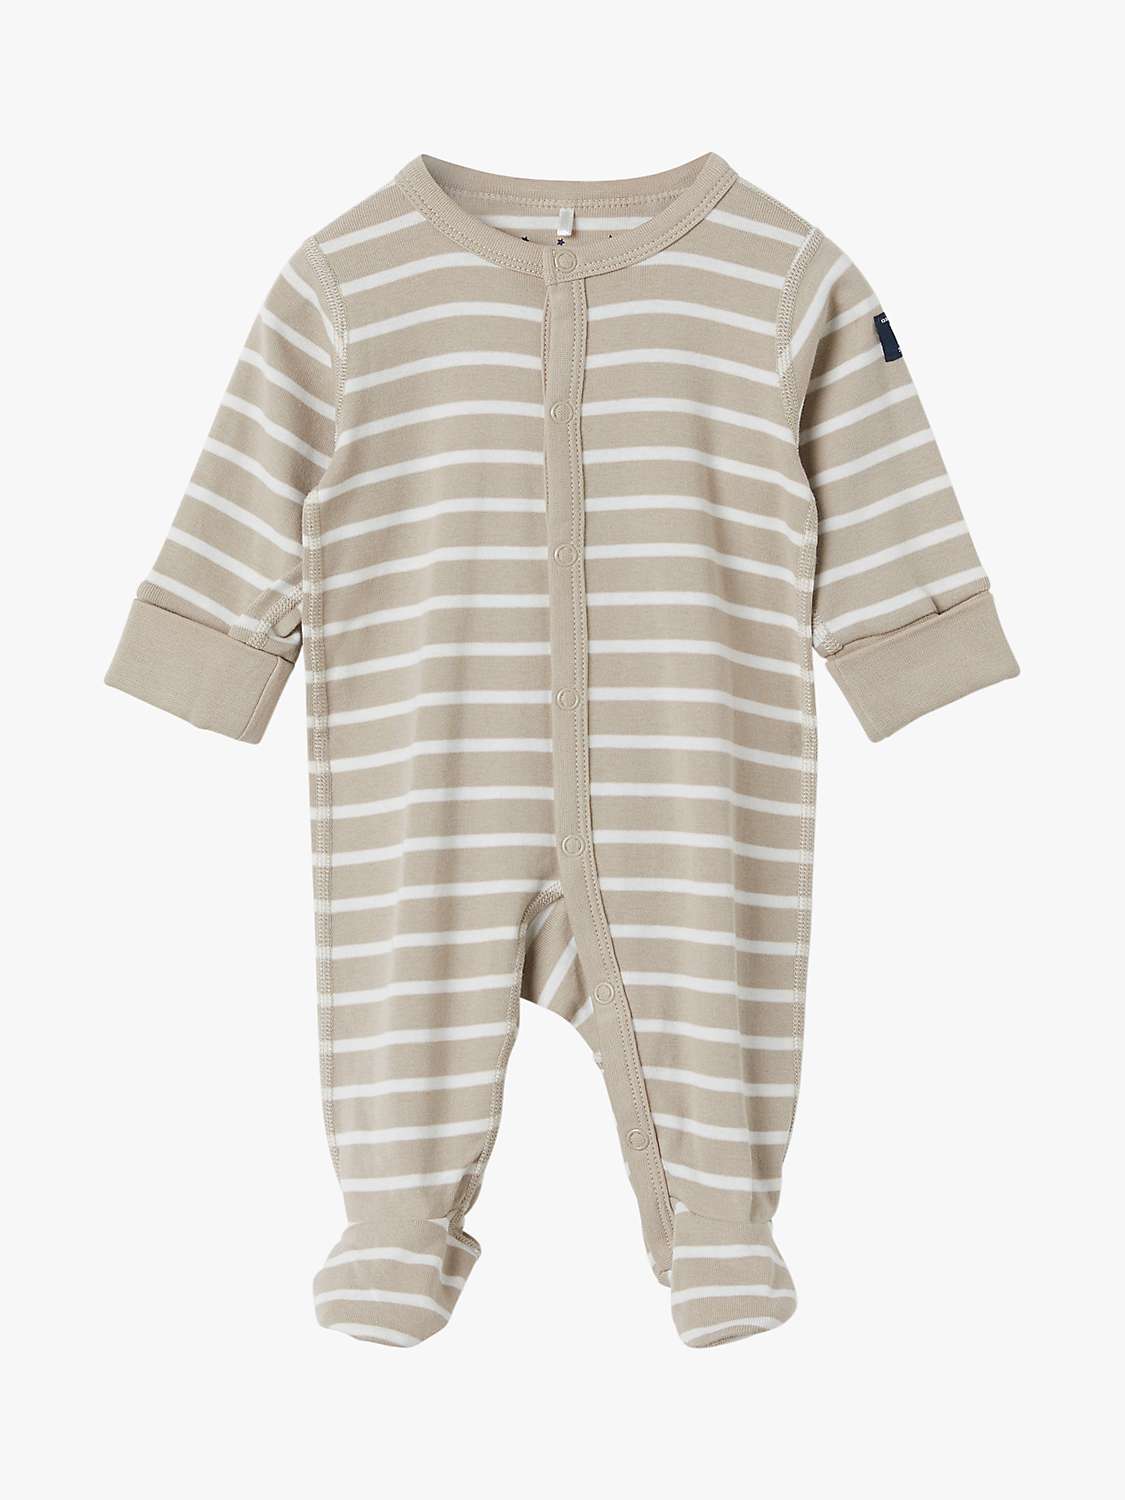 Buy Polarn O. Pyret Baby Organic Cotton Stripe Sleepsuit, Natural Online at johnlewis.com